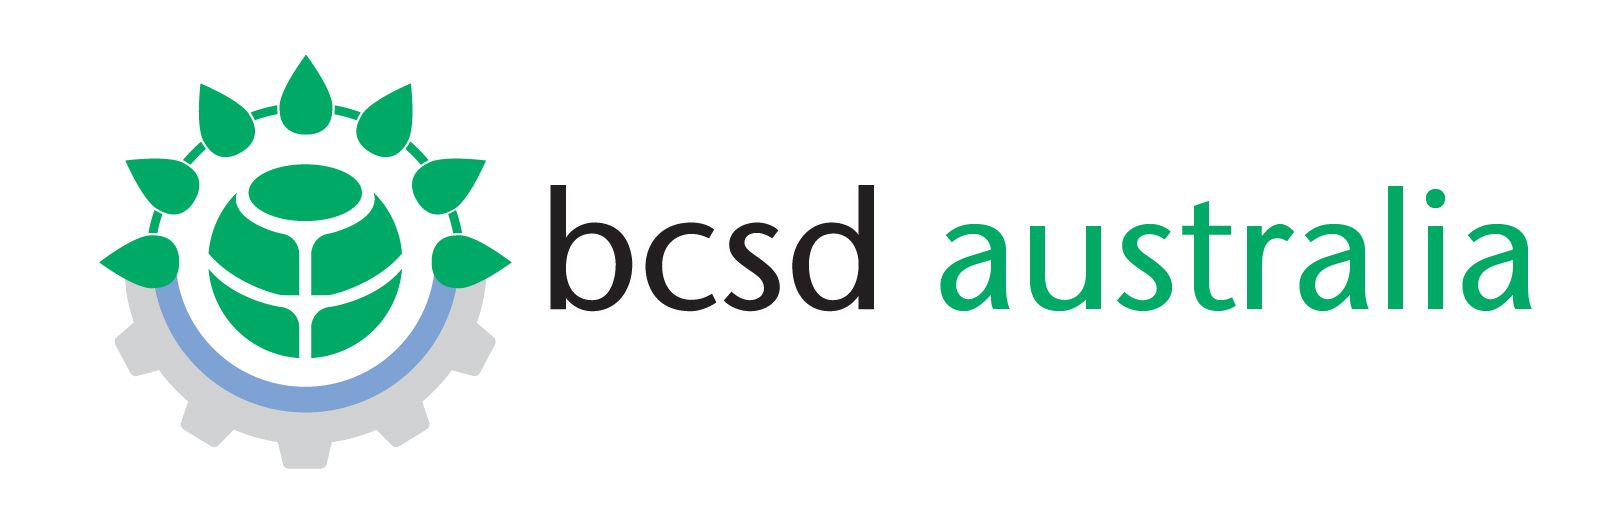 BCSD Australia